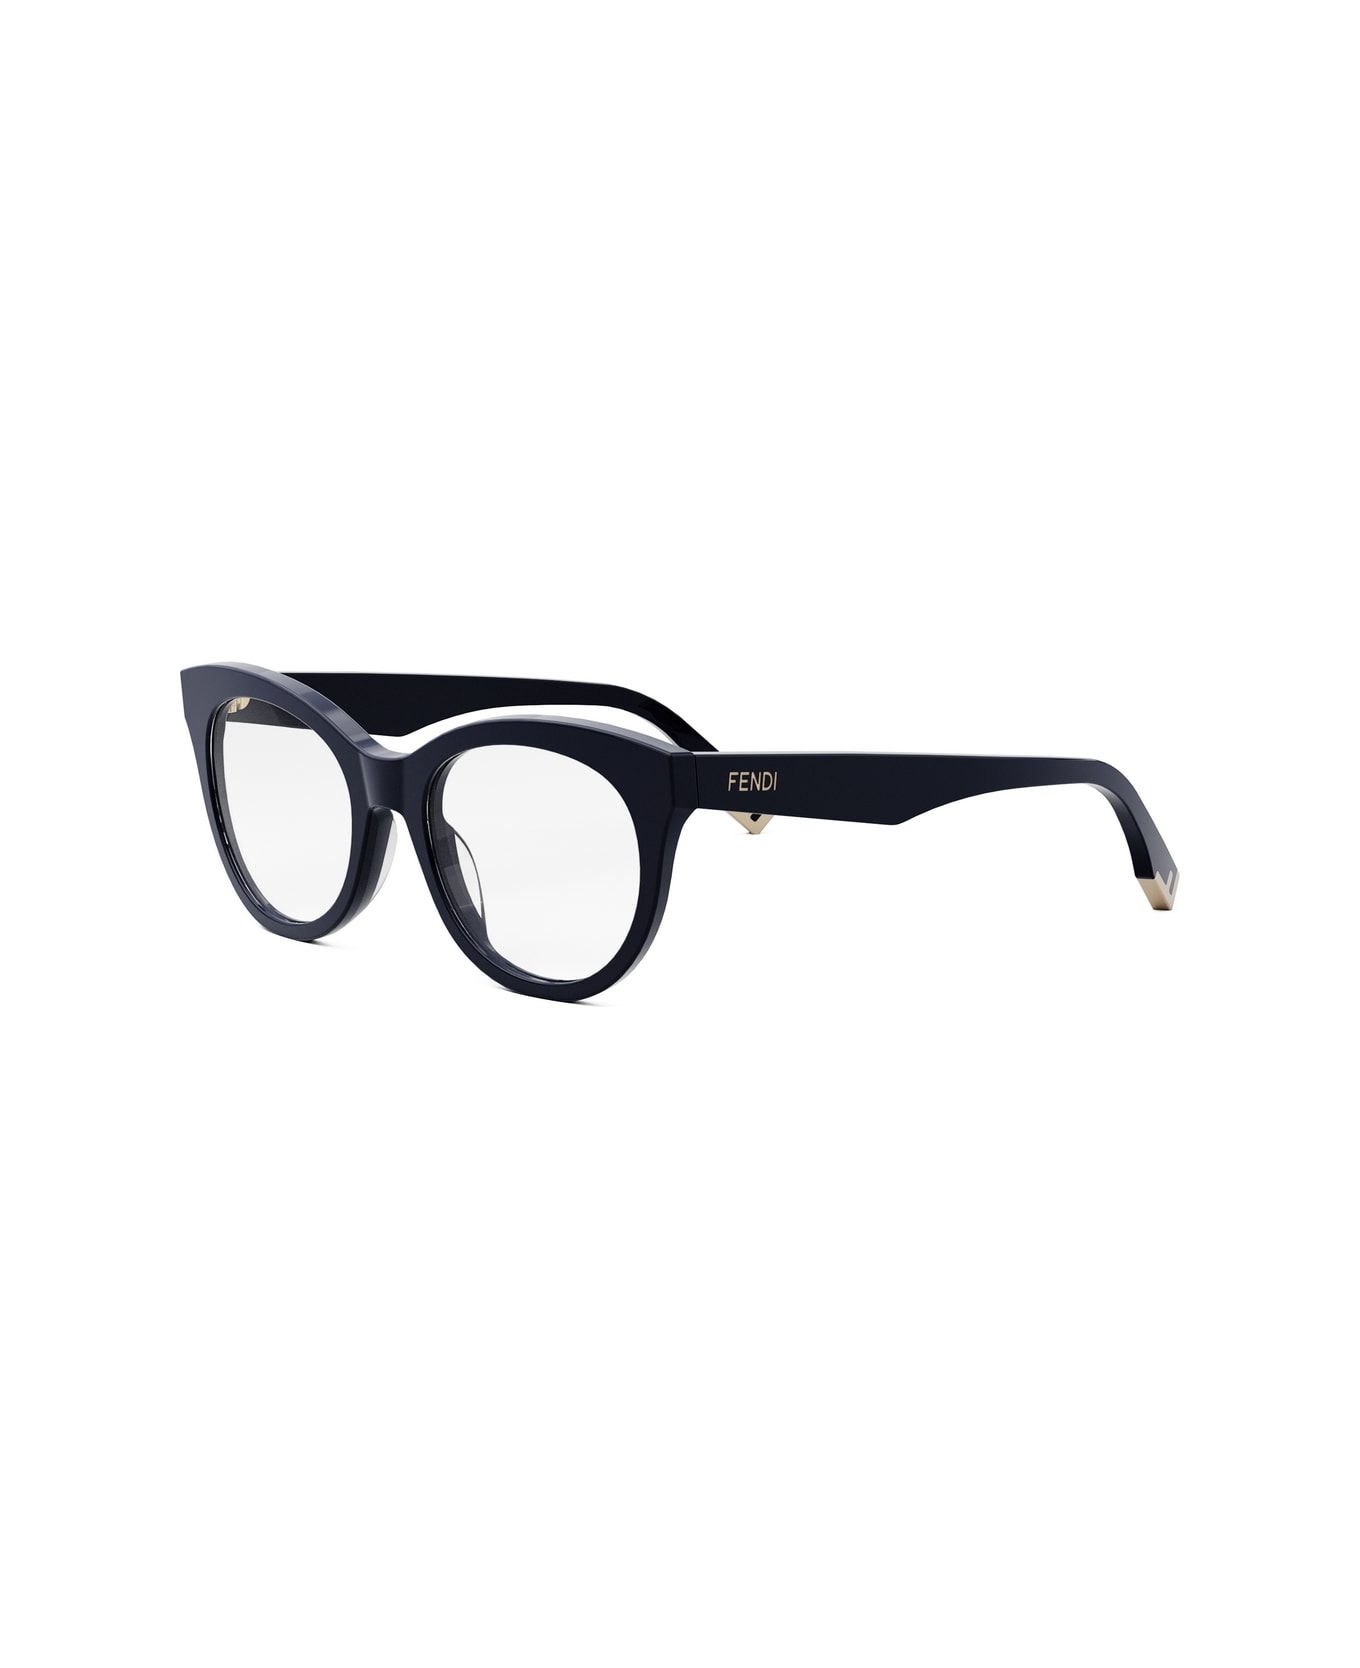 Fendi Eyewear FE50074i 090 Glasses